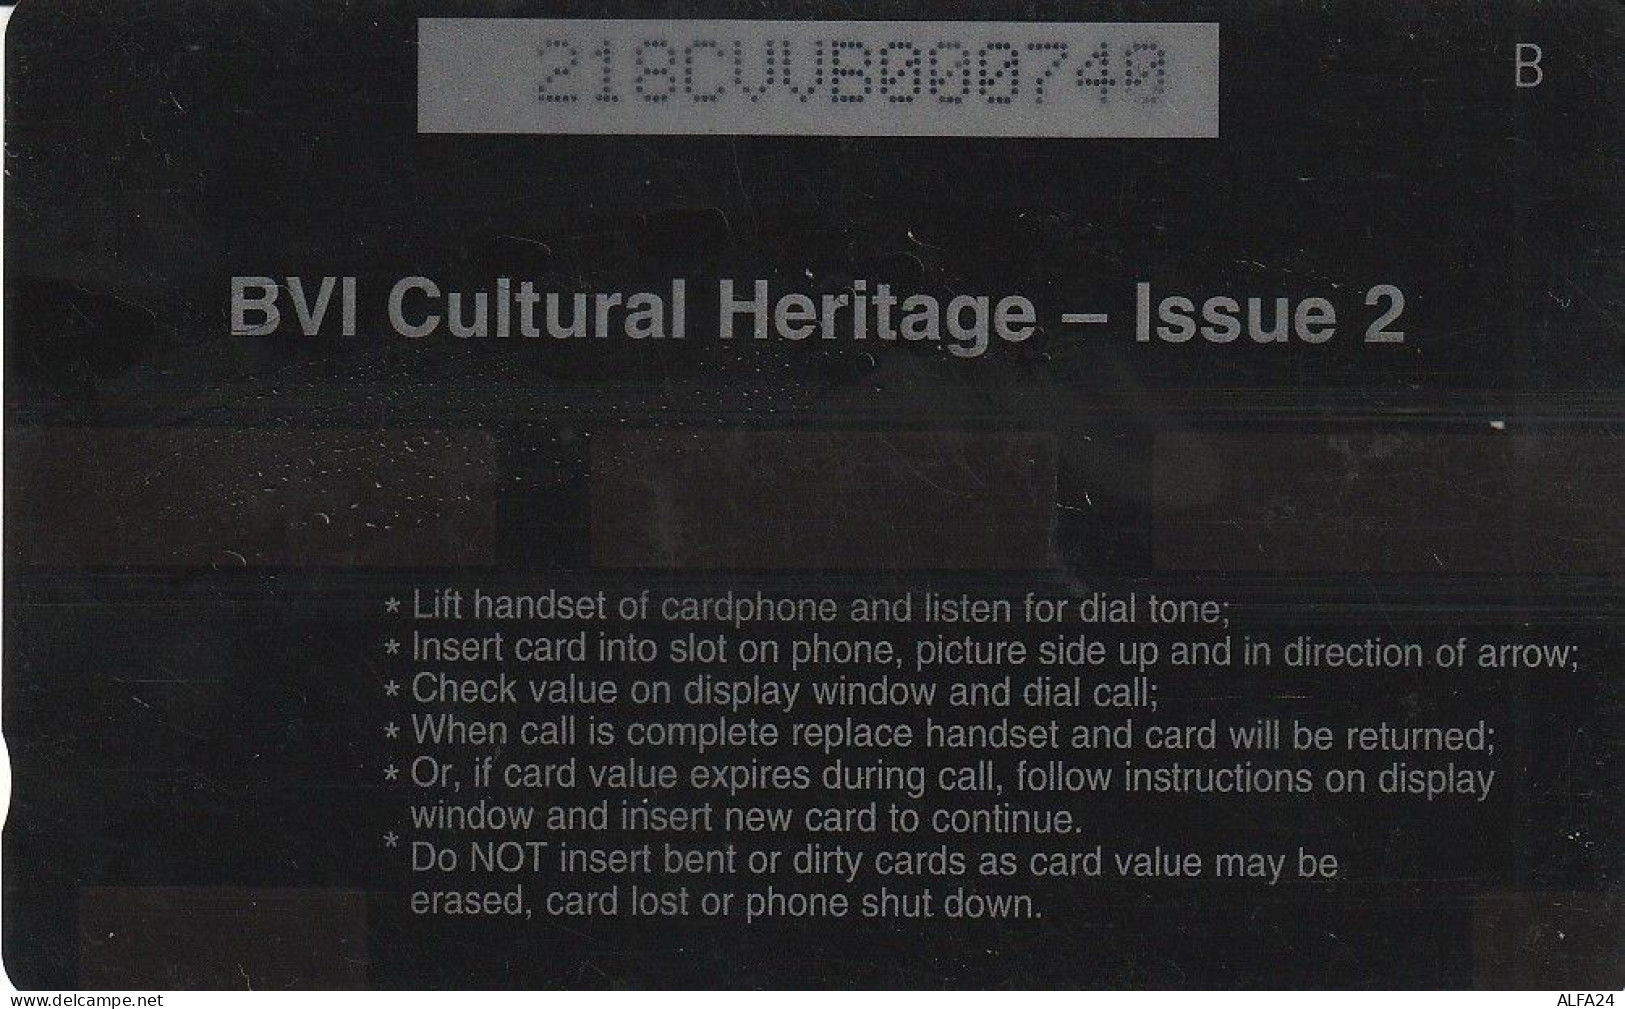 PHONE CARD BRITISH VIRGIN ISLAND  (E8.14.2 - Jungferninseln (Virgin I.)